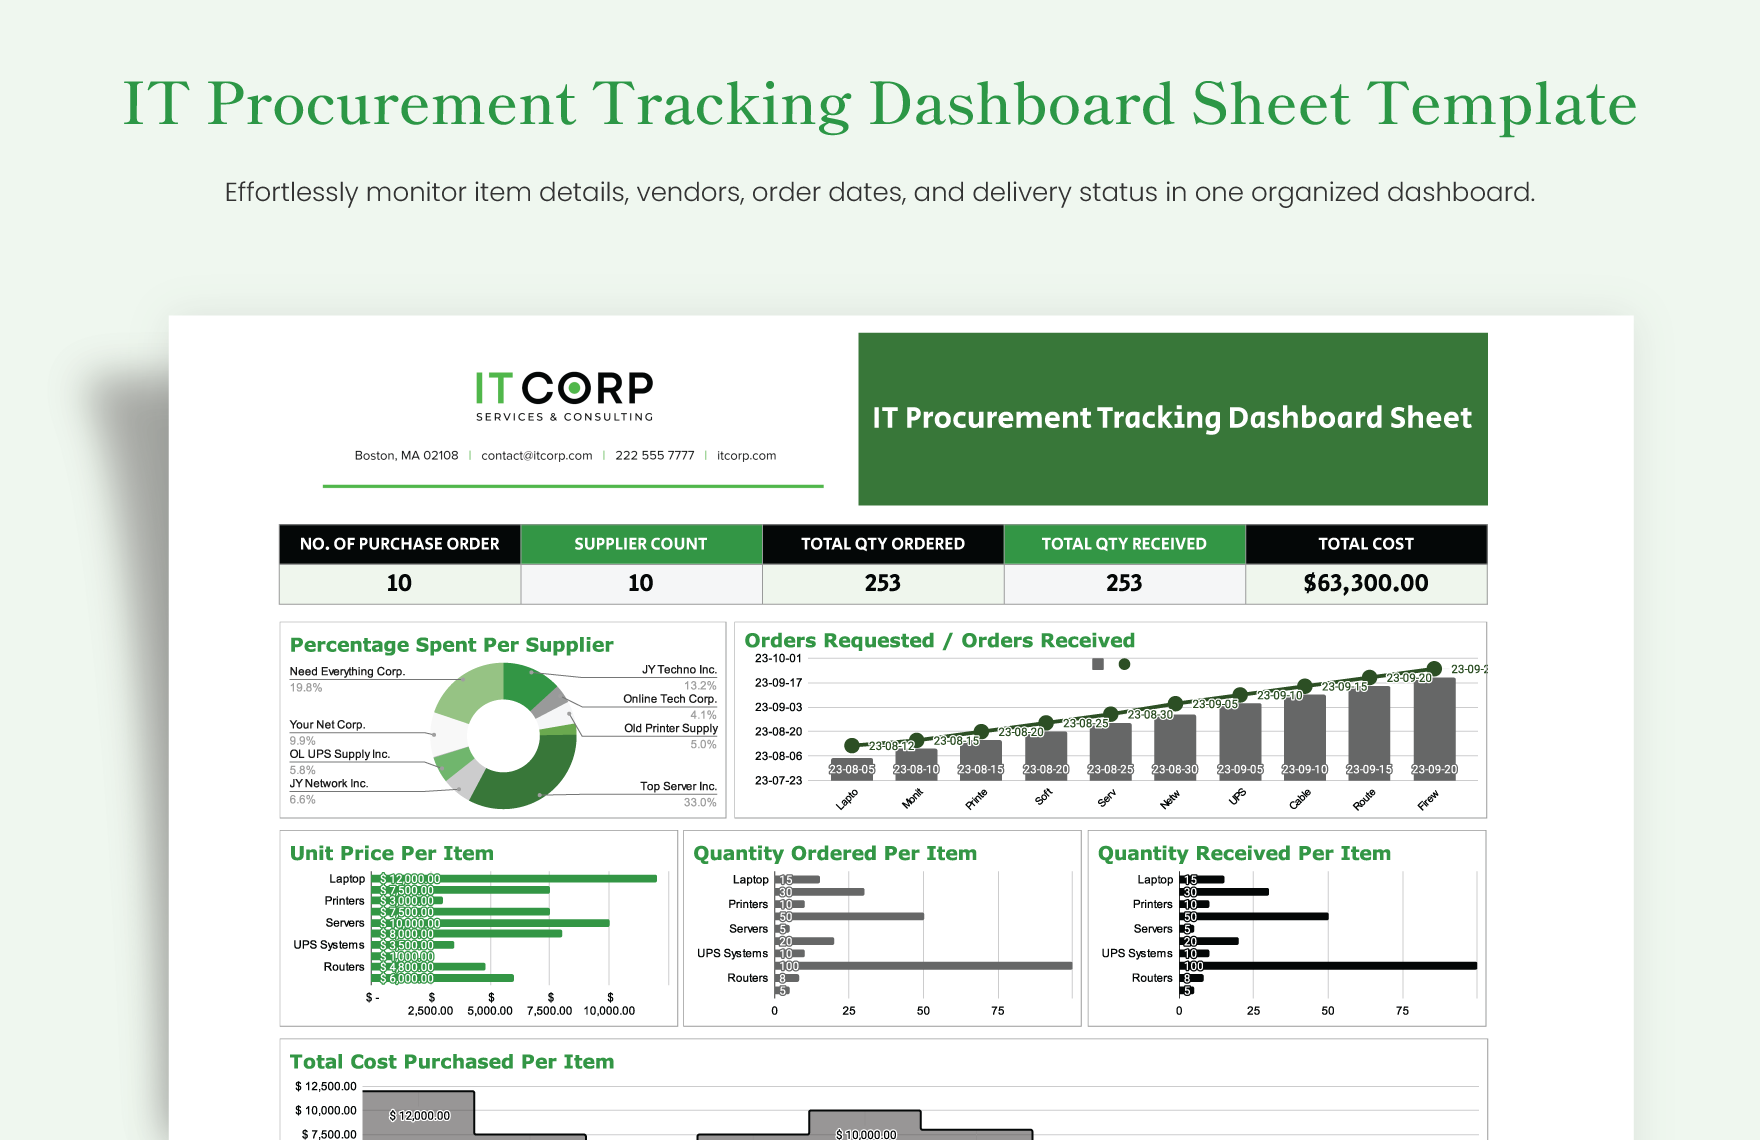 IT Procurement Tracking Dashboard Sheet Template